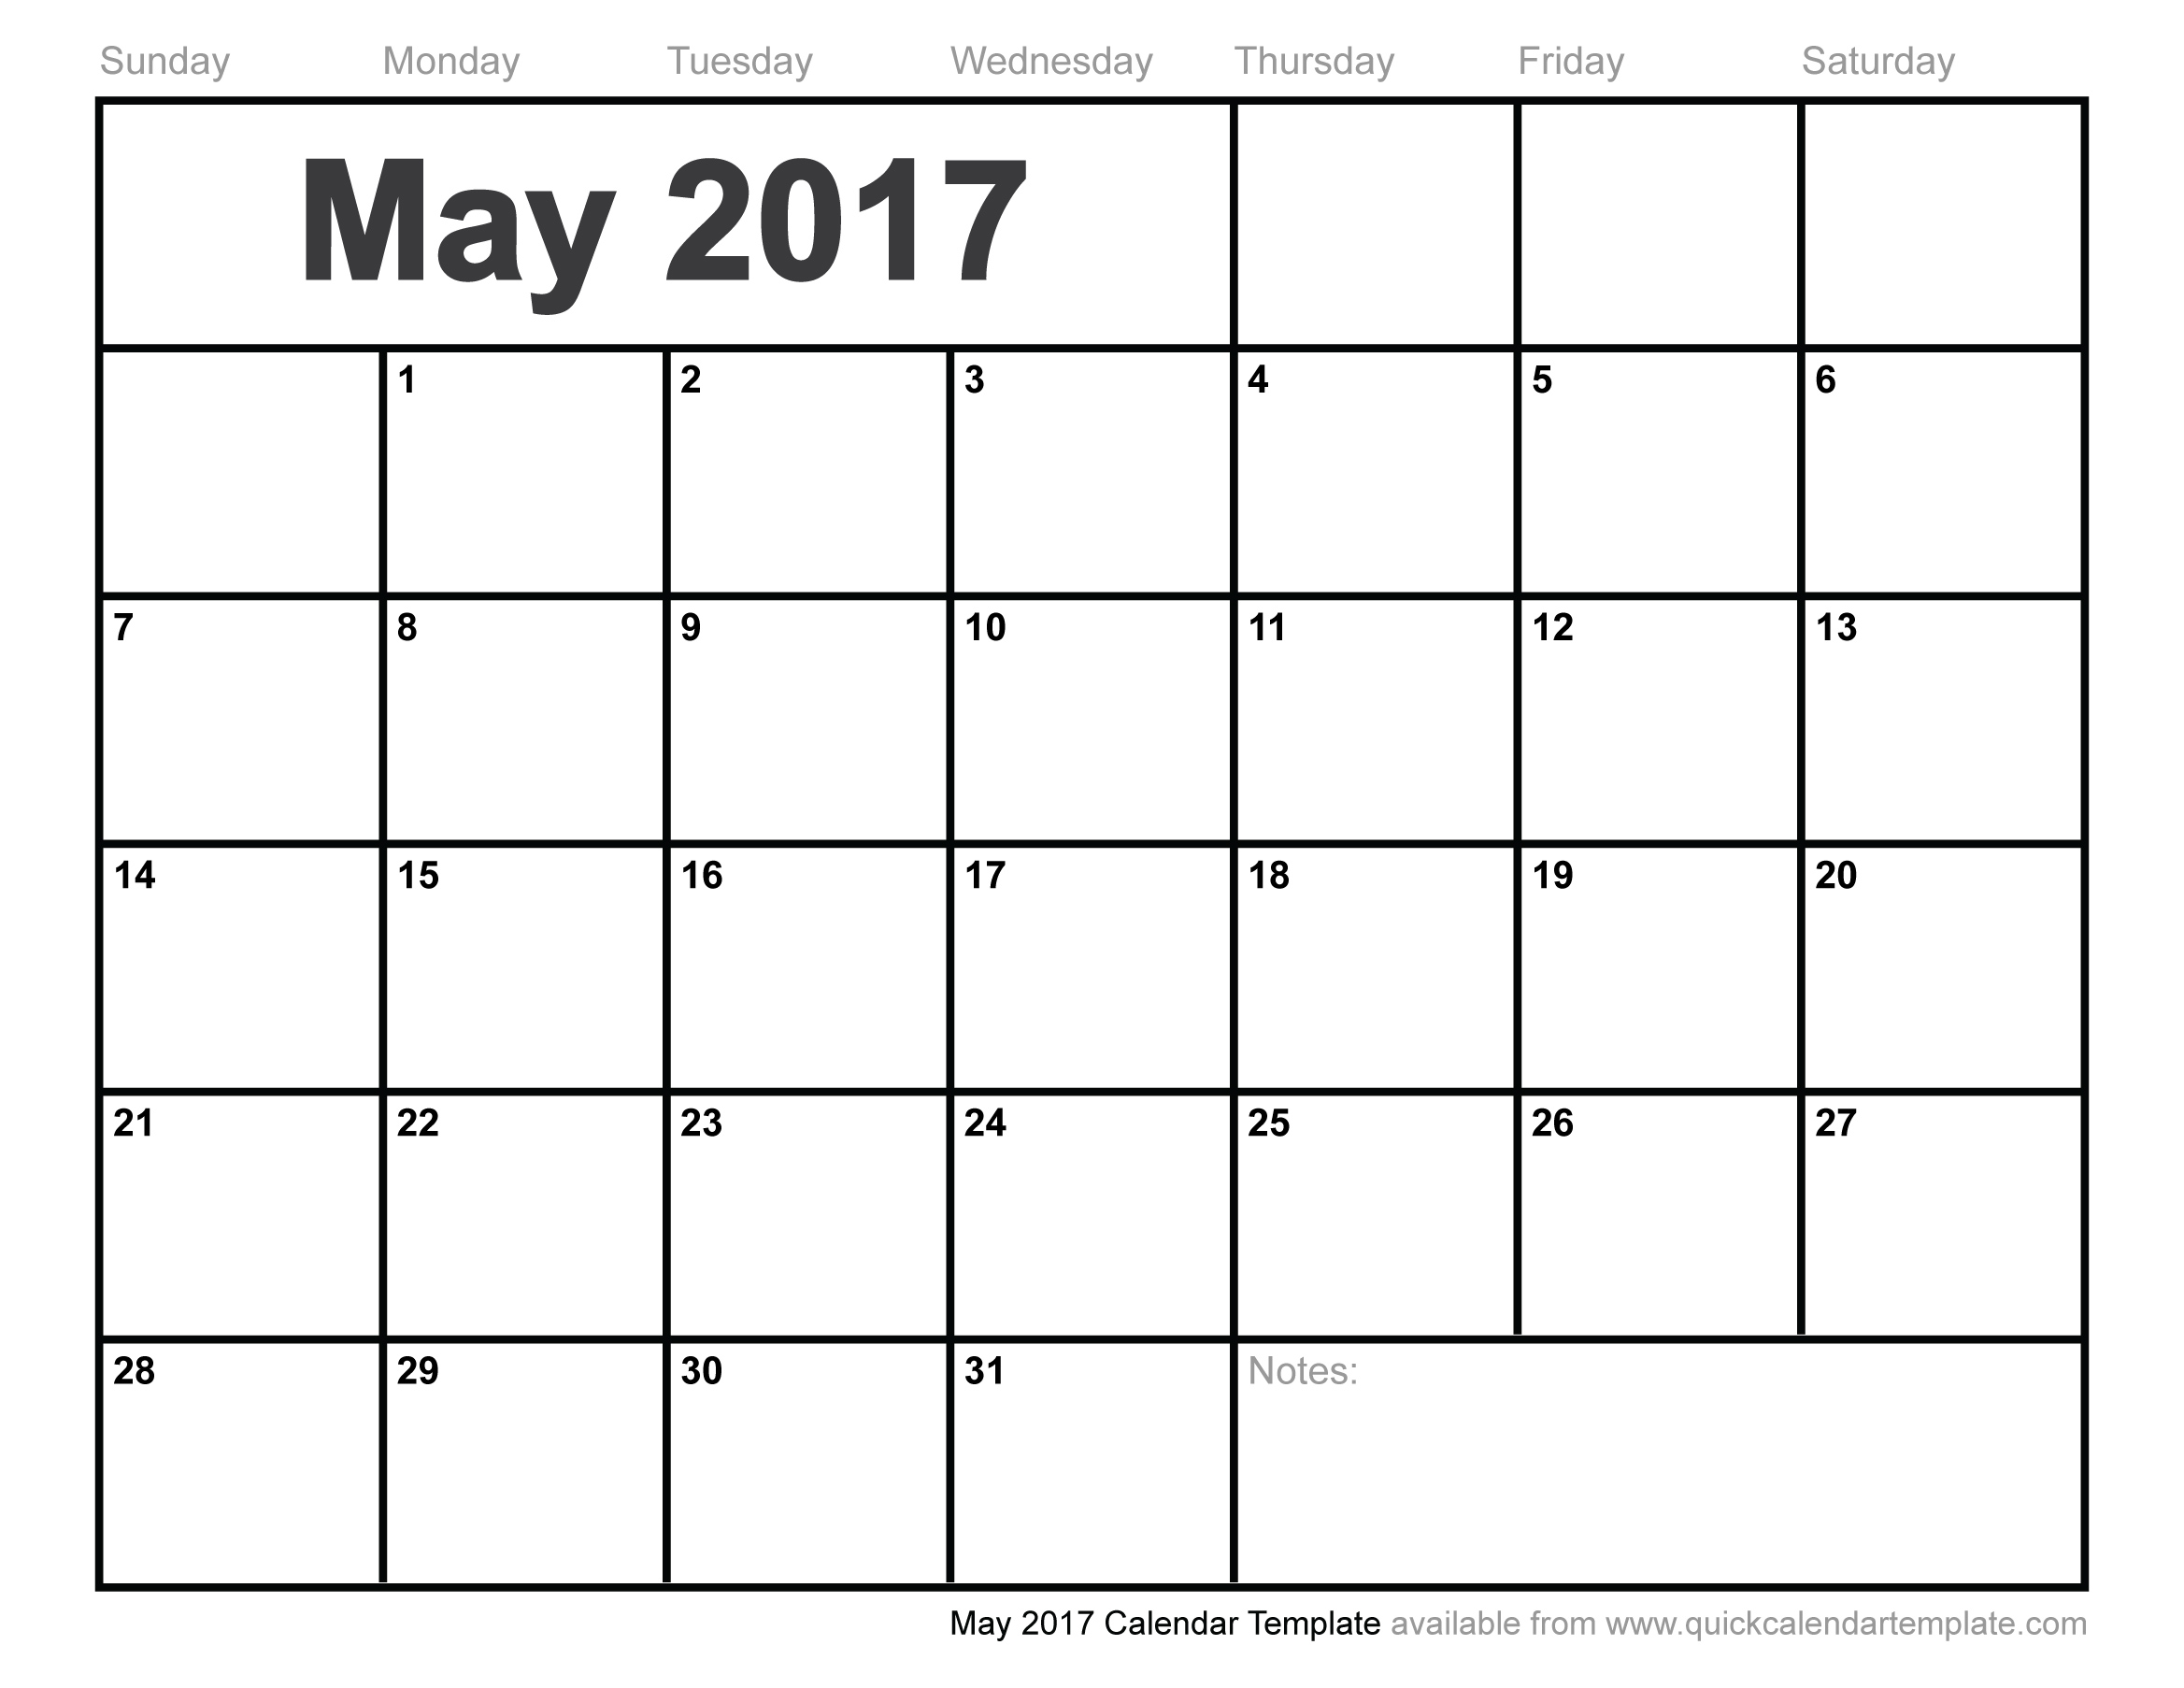 May 2017 Calendar Template